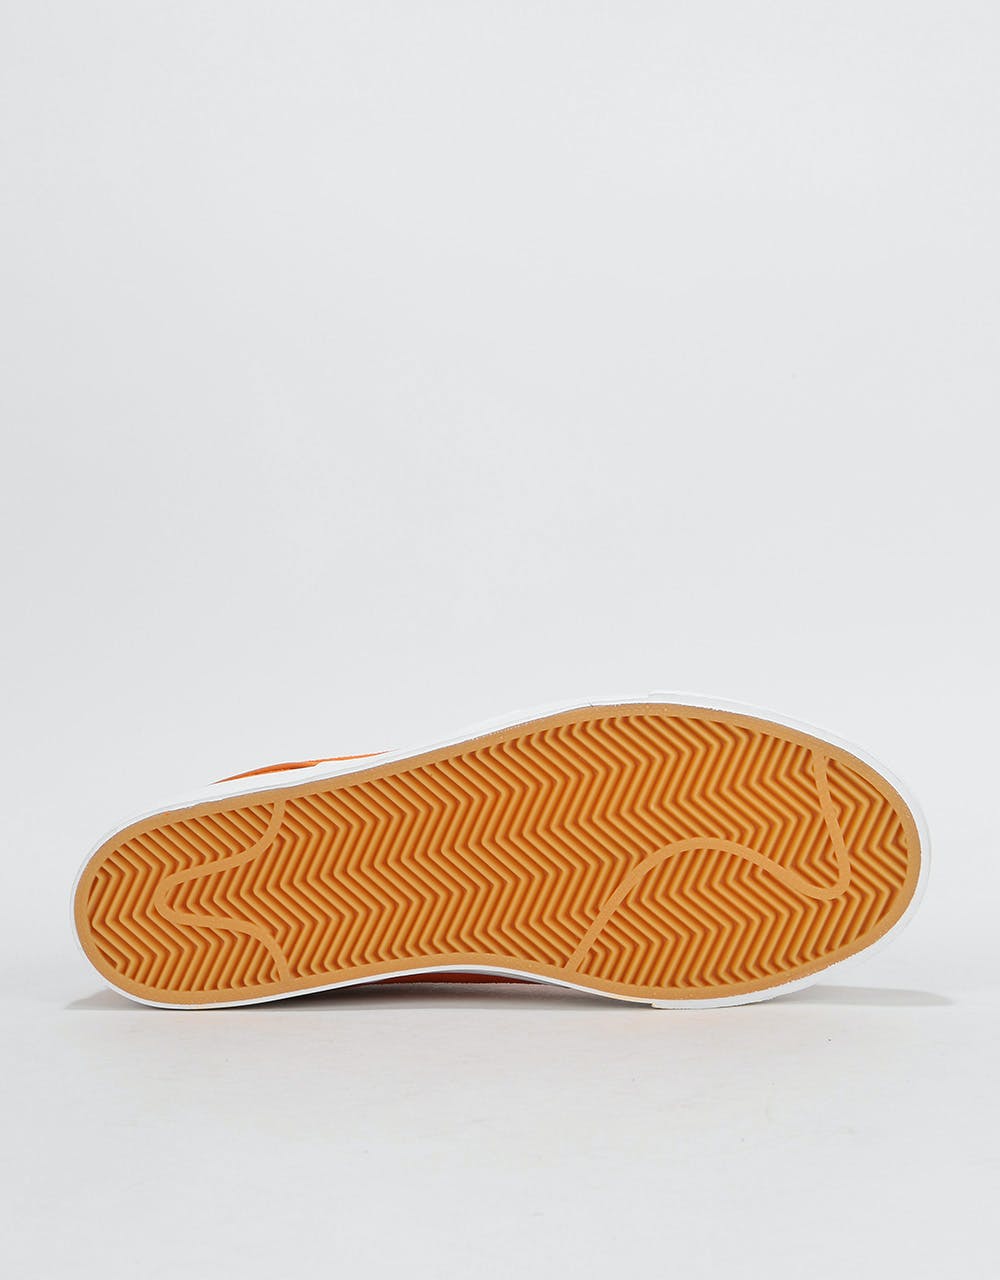 Nike SB Zoom Stefan Janoski Skate Shoes - Cinder Orange/White